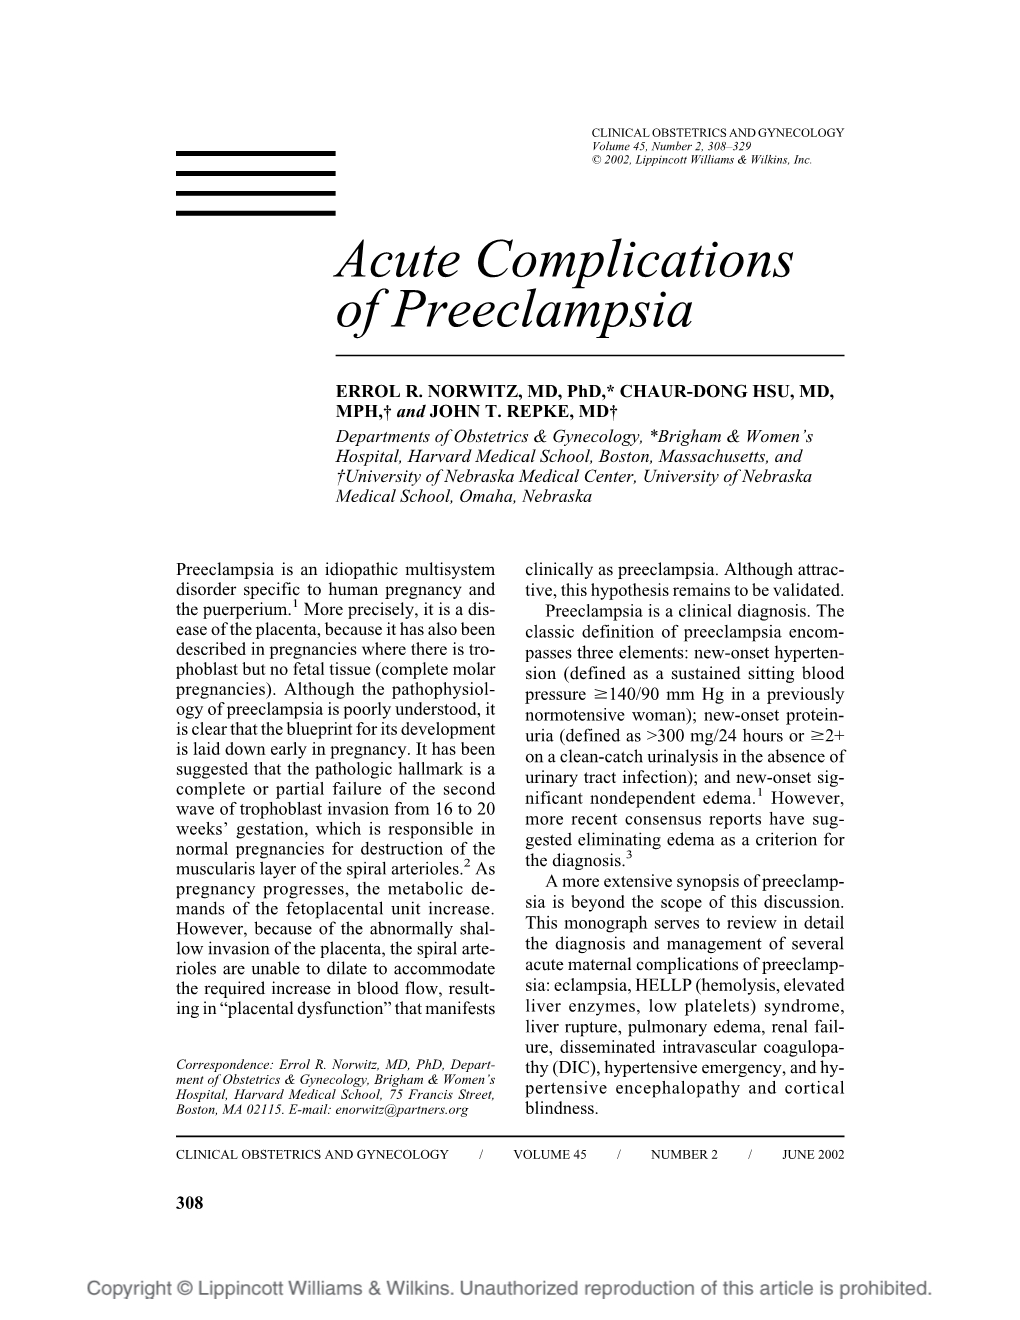 Acute Complications of Preeclampsia